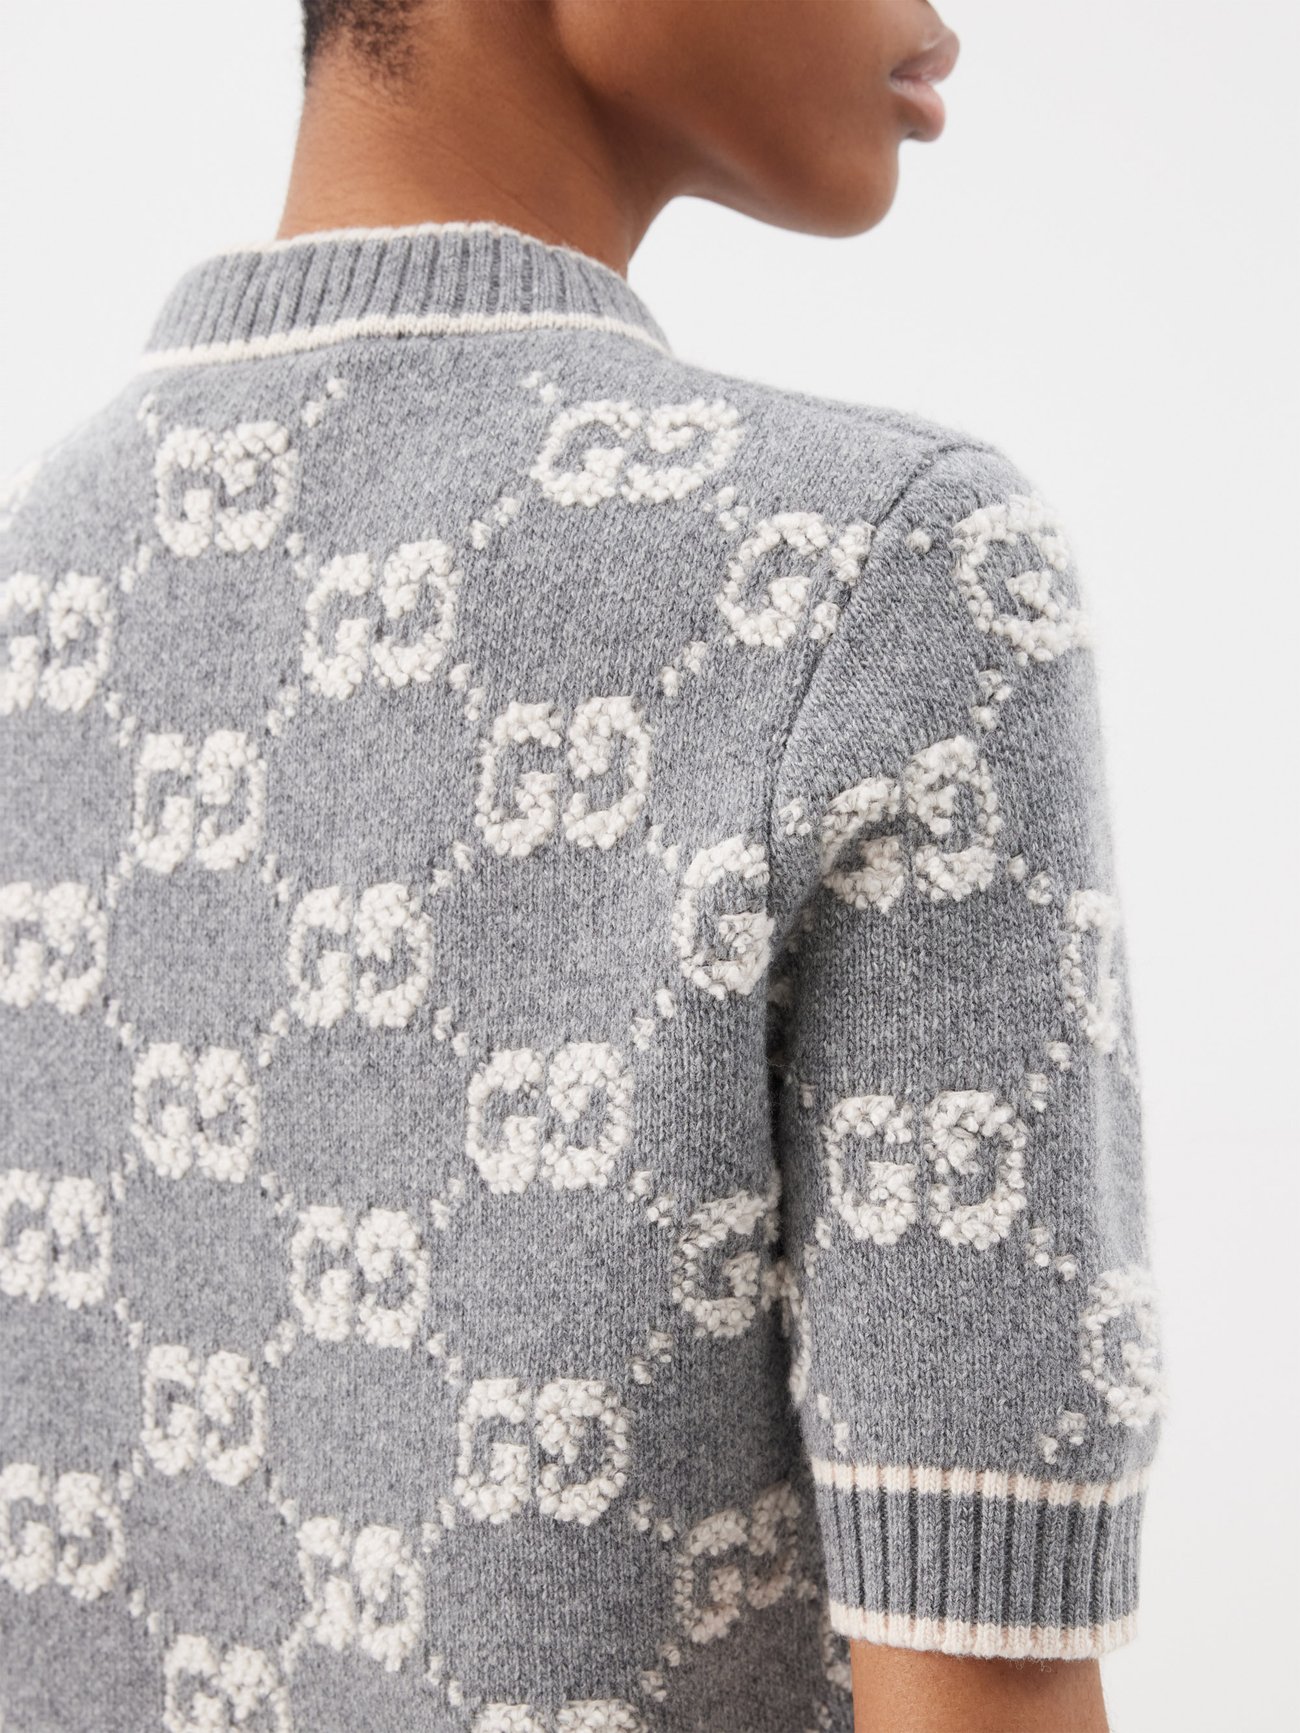 Grey GG-bouclé jacquard wool knit top, Gucci